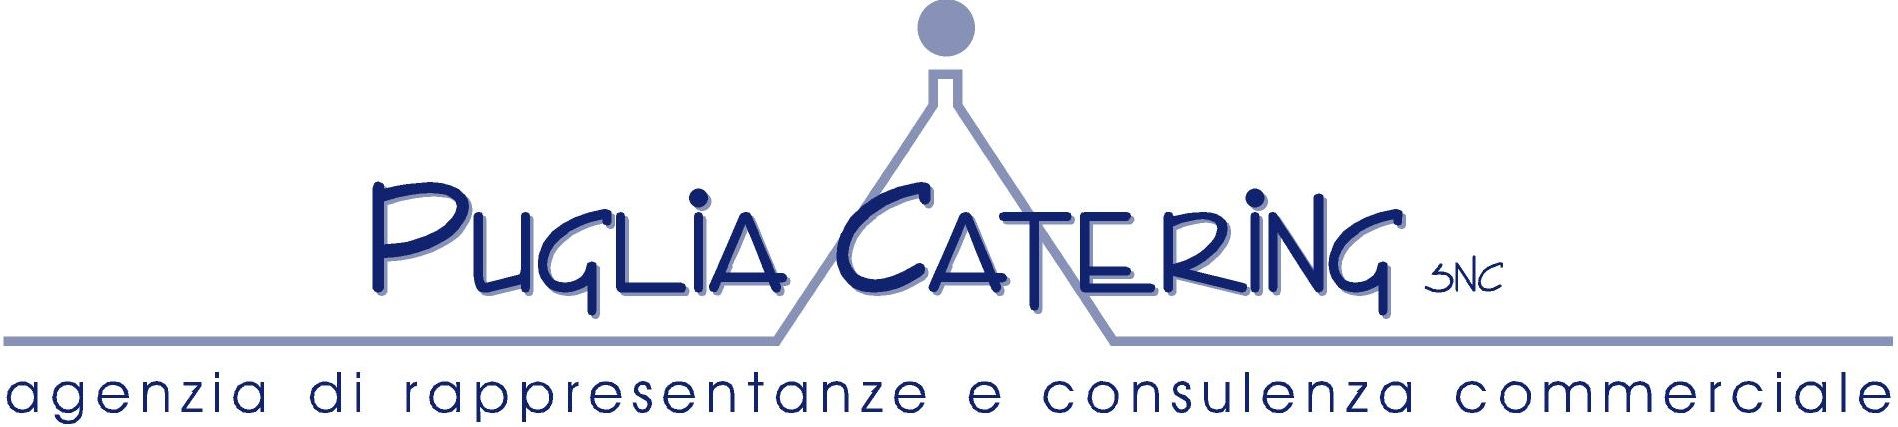 Puglia Catering